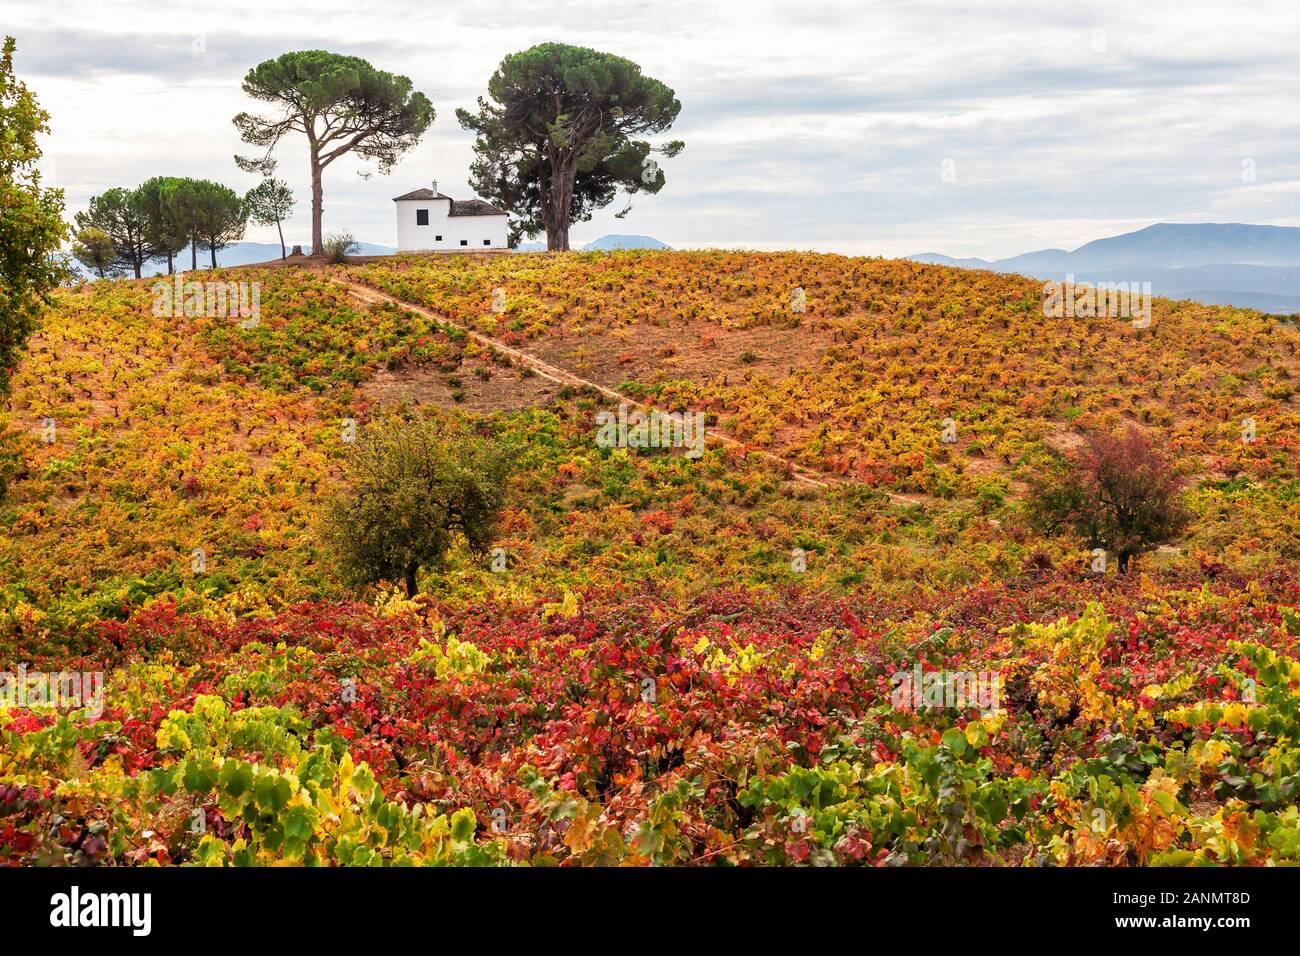 Vines and Vineyards dominate the autumn landscape in the Bierzo Wine Region on El Camino de Santiago in Spain. Stock Photo